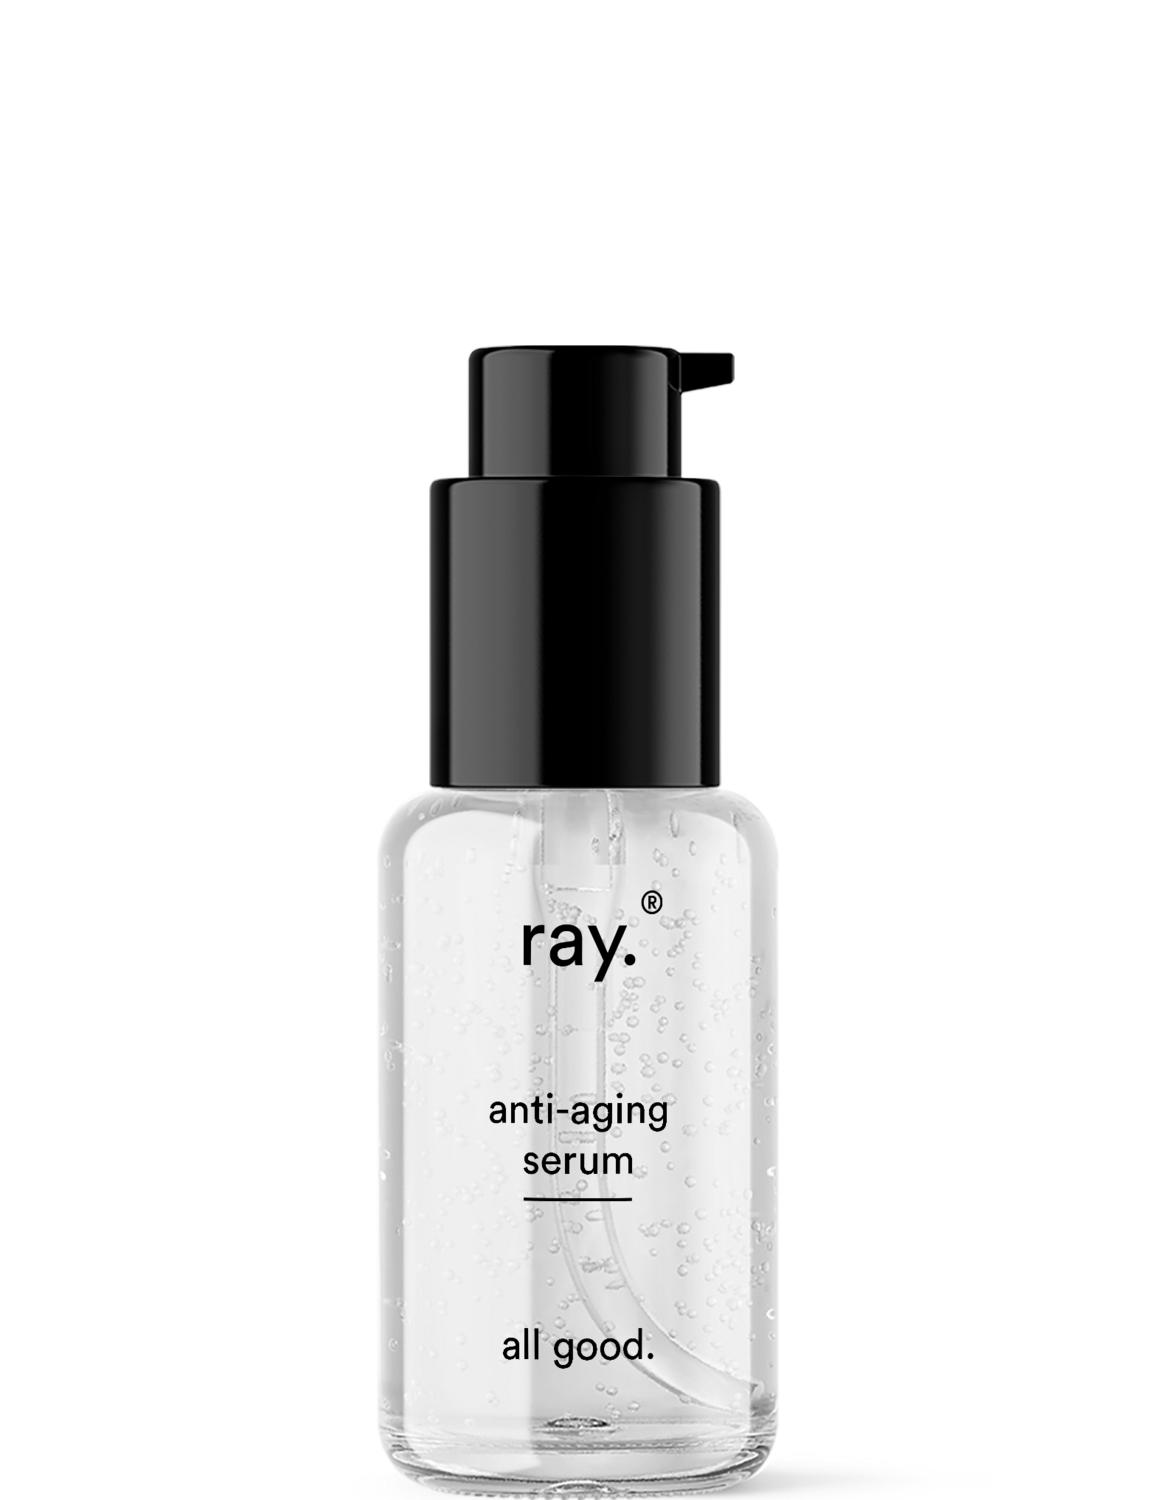 Ray - anti-aging serum